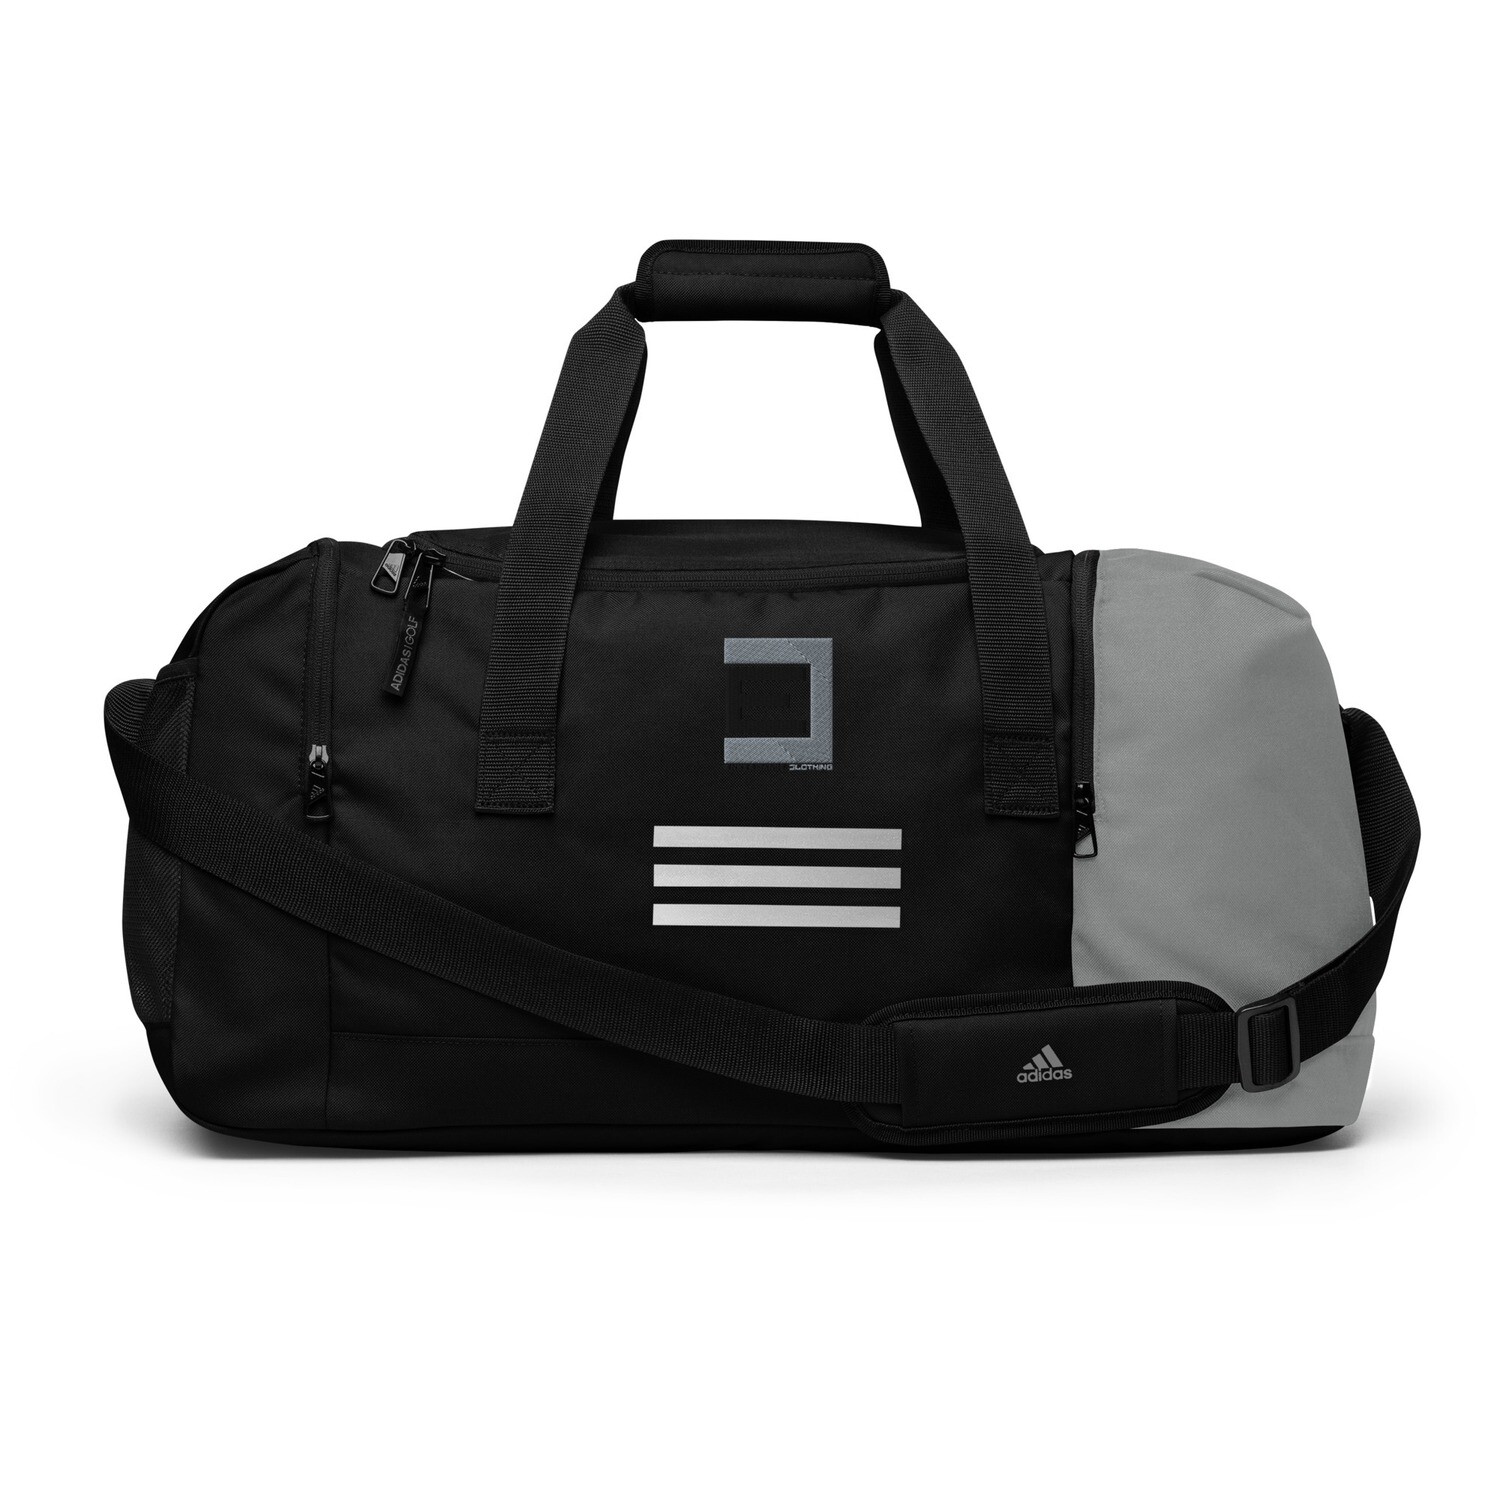 Enheritance X Adidas Duffle Bag